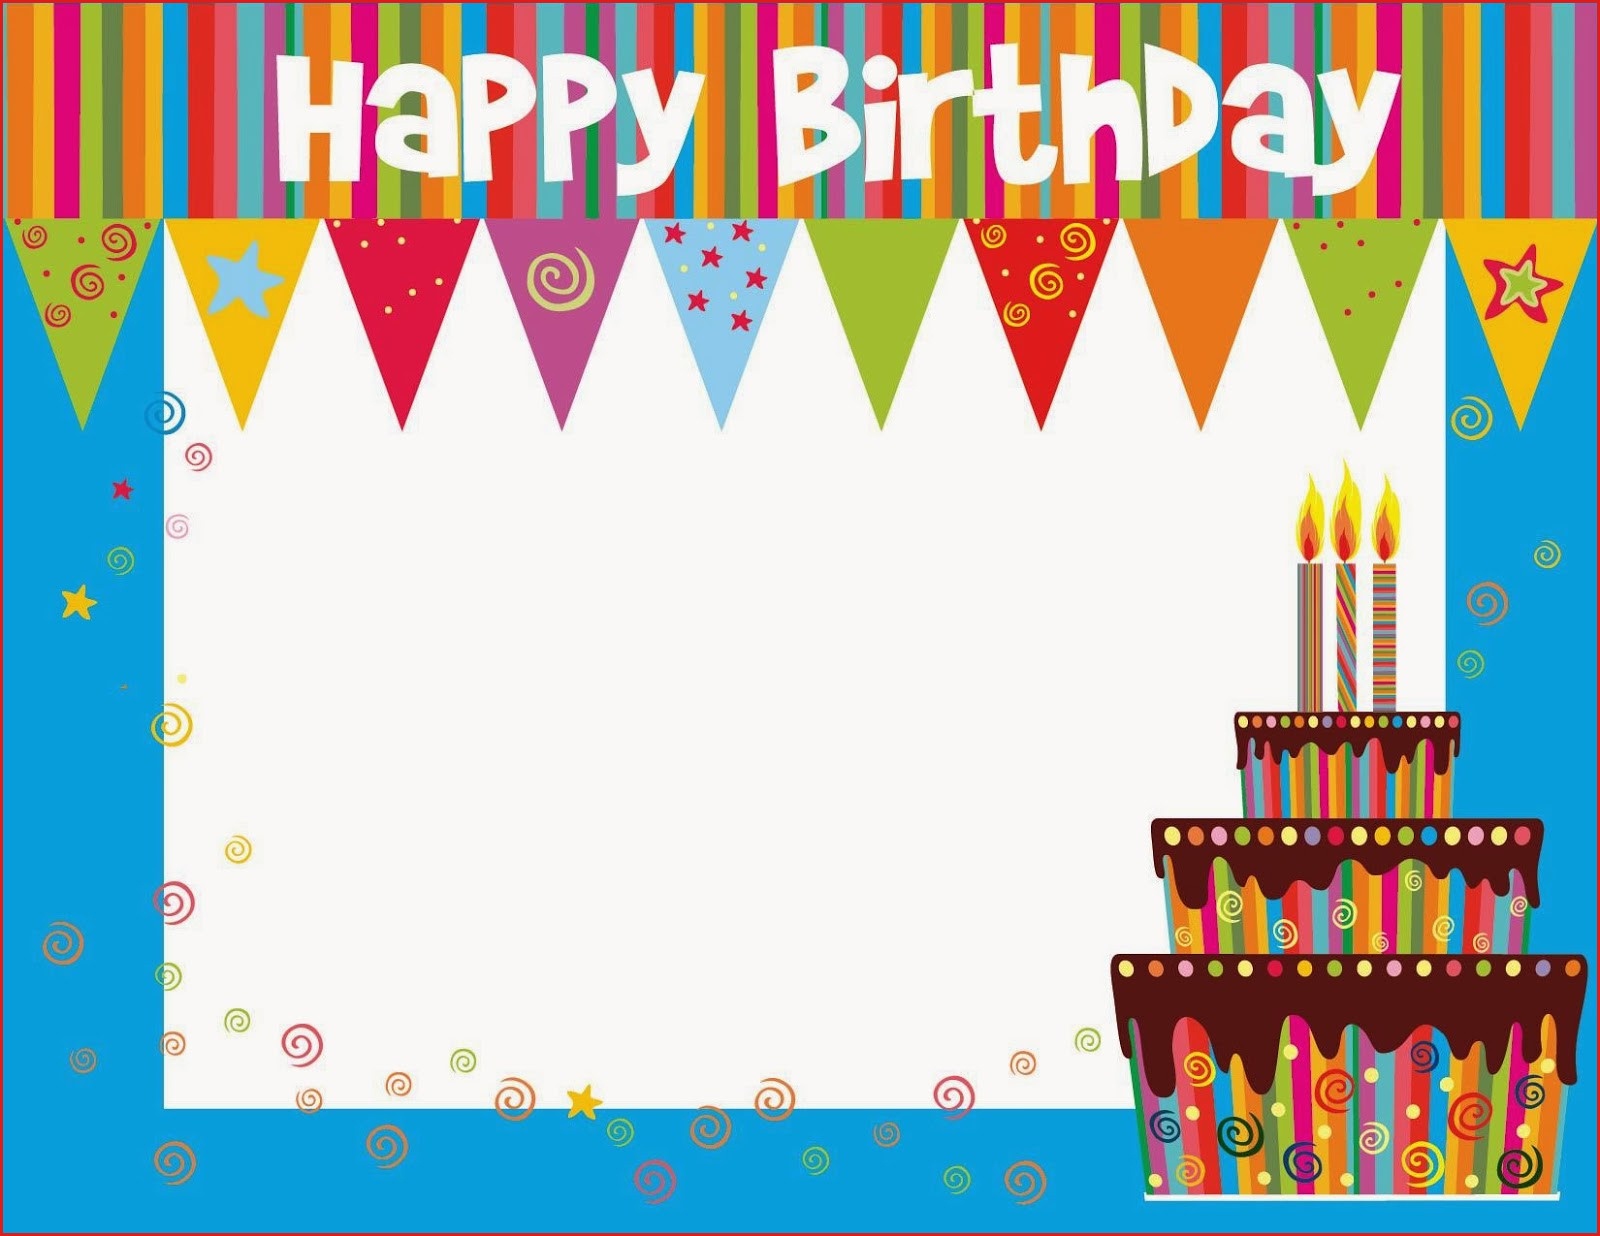 Create Birthday Cards Online Free Printable Birthday Cards Ideas - Free Printable Cards Online